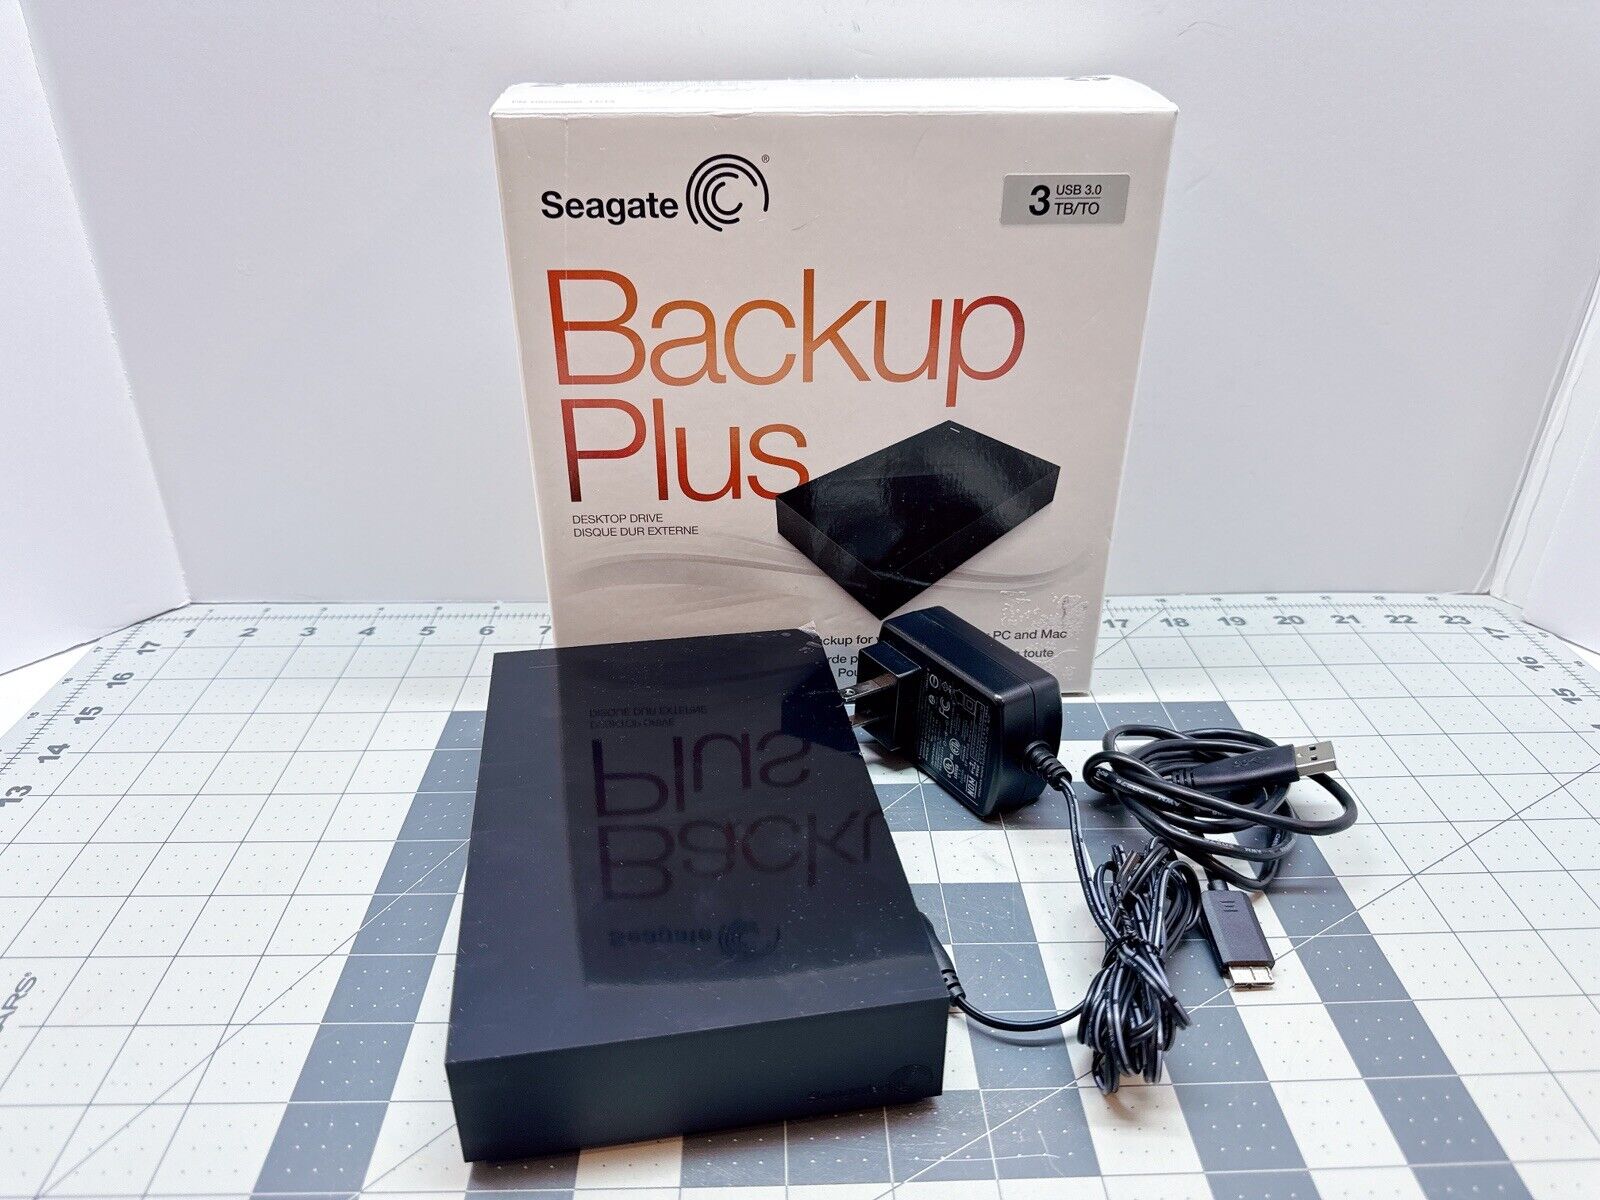 Seagate Backup Plus Desktop Drive 3TB/ USB 3.0, Used Less Than 1 Hour